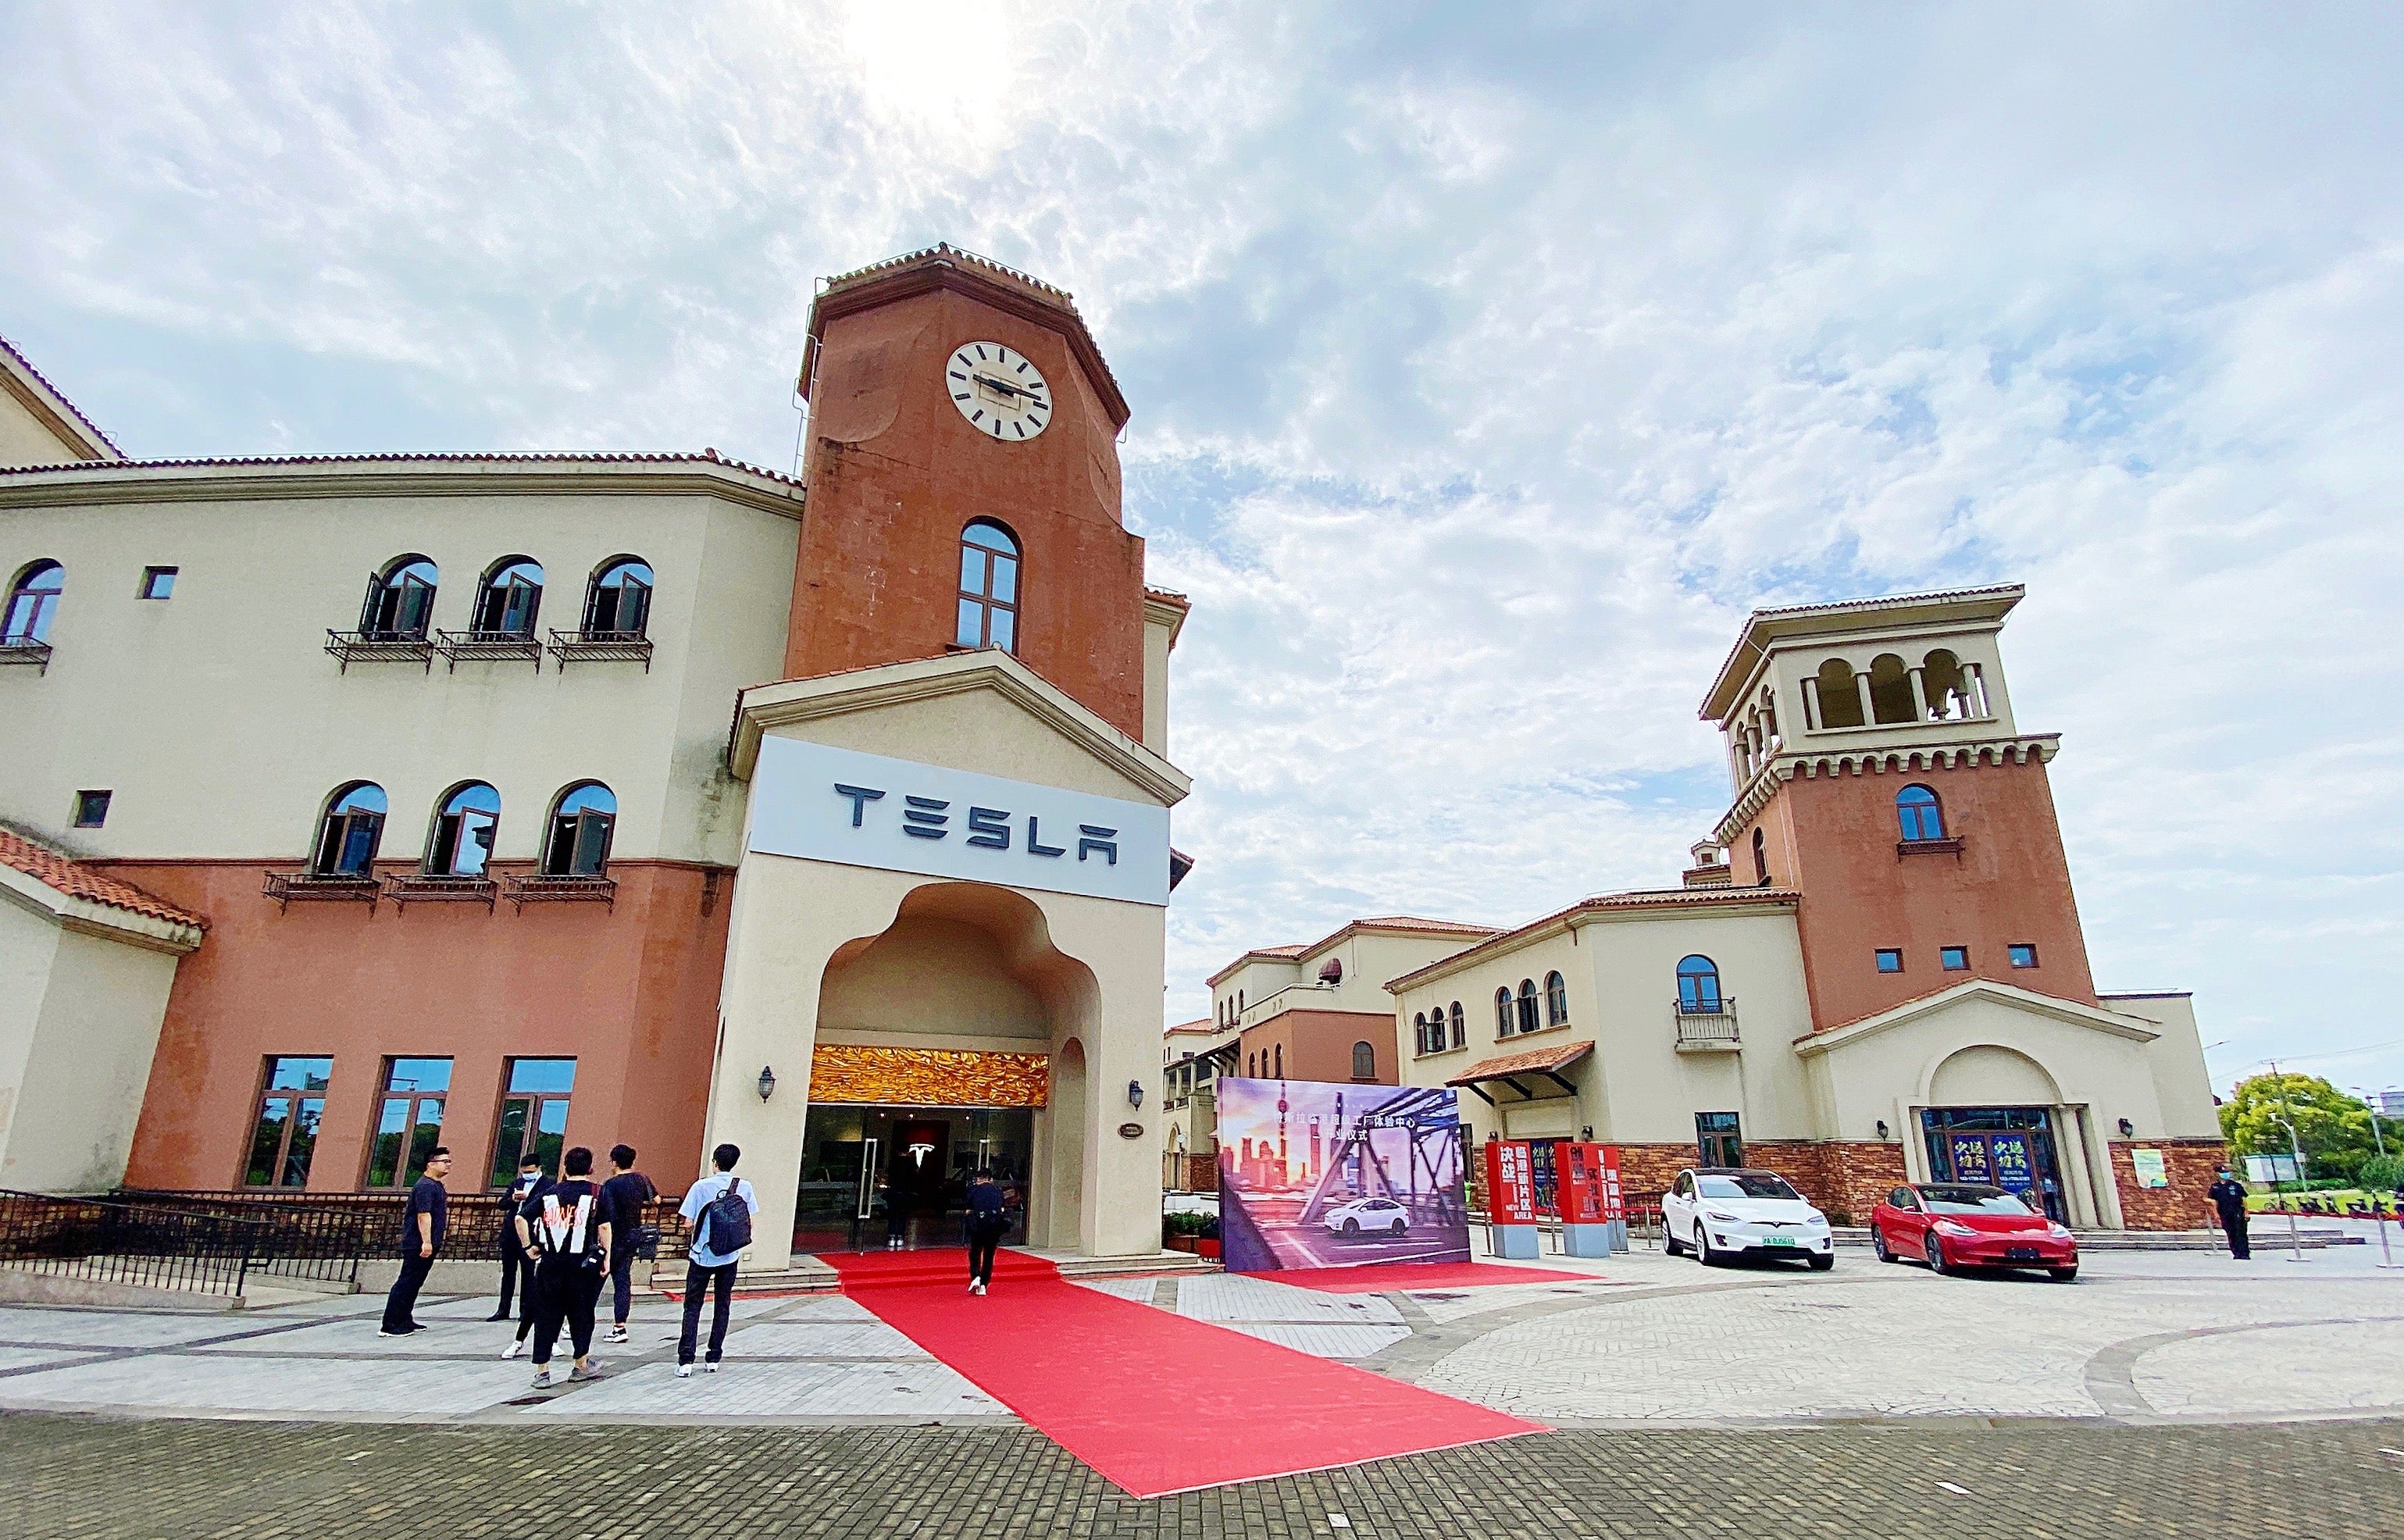 Tesla China Opens News Experience Center In Lingang Near Giga Shanghai